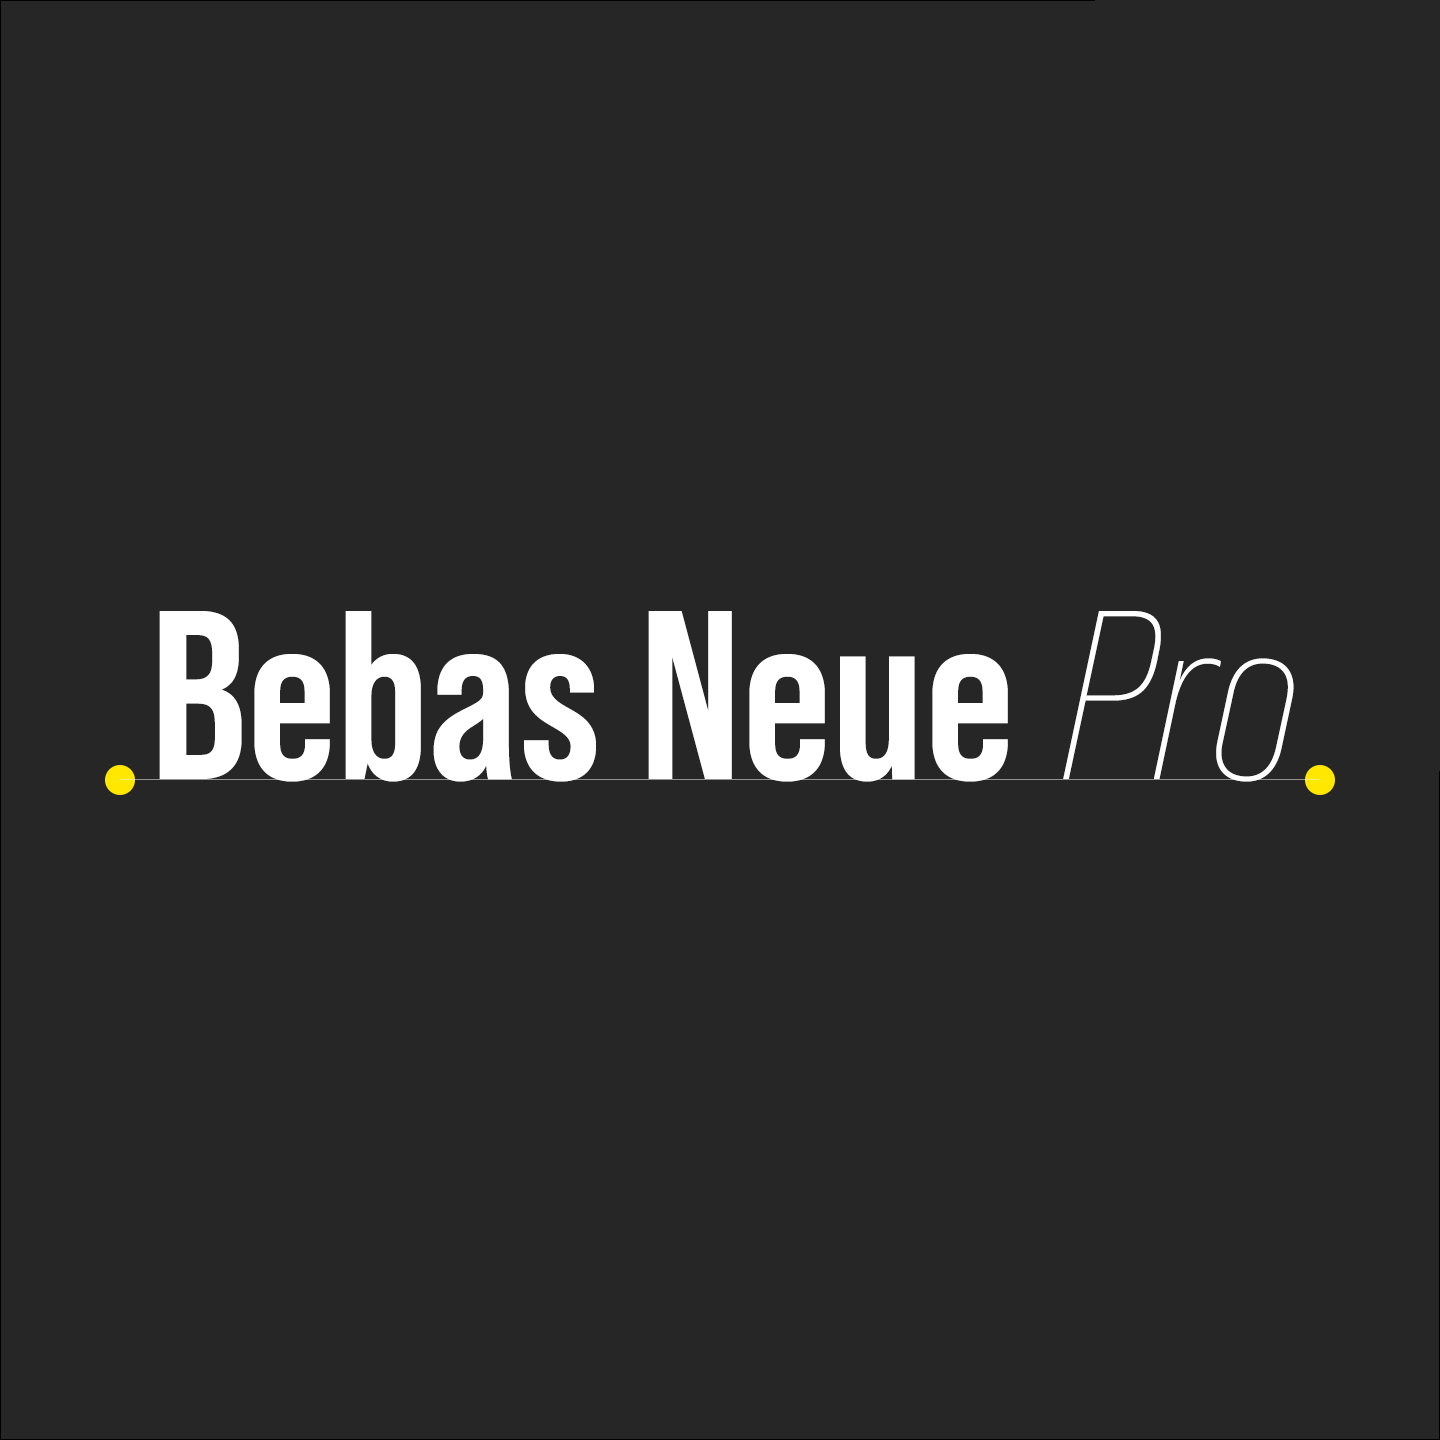 Bebas Neue Pro英文字体完整版 设计素材 第6张